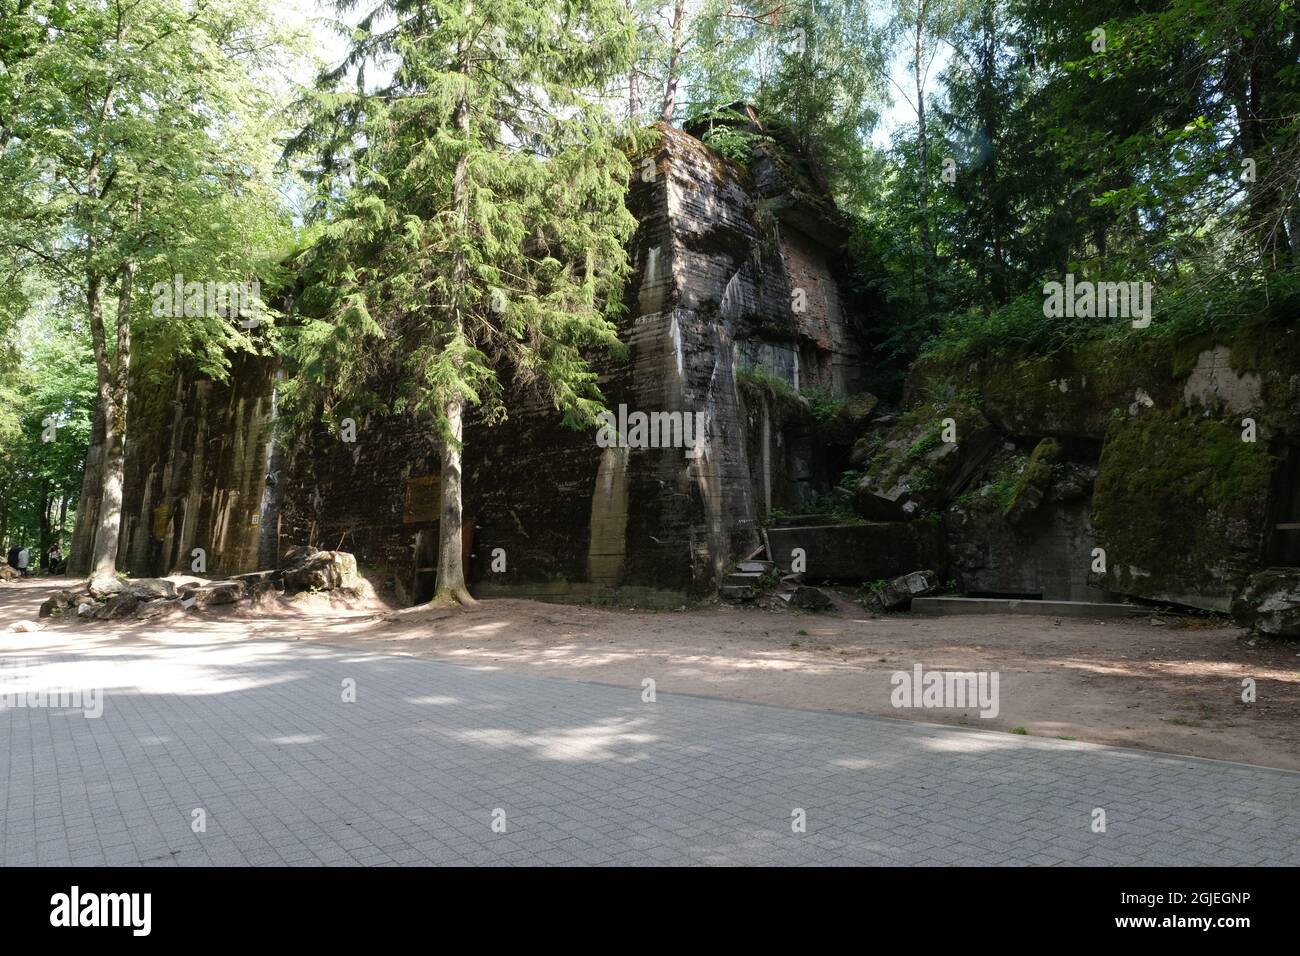 Ketrzyn, Gierloz, Poland - July 19, 2021: Bormann's bunker at the Wolf's Lair (Wilczy Szaniec, Wolfsschanze) built by the Organisation Todt. Stock Photo